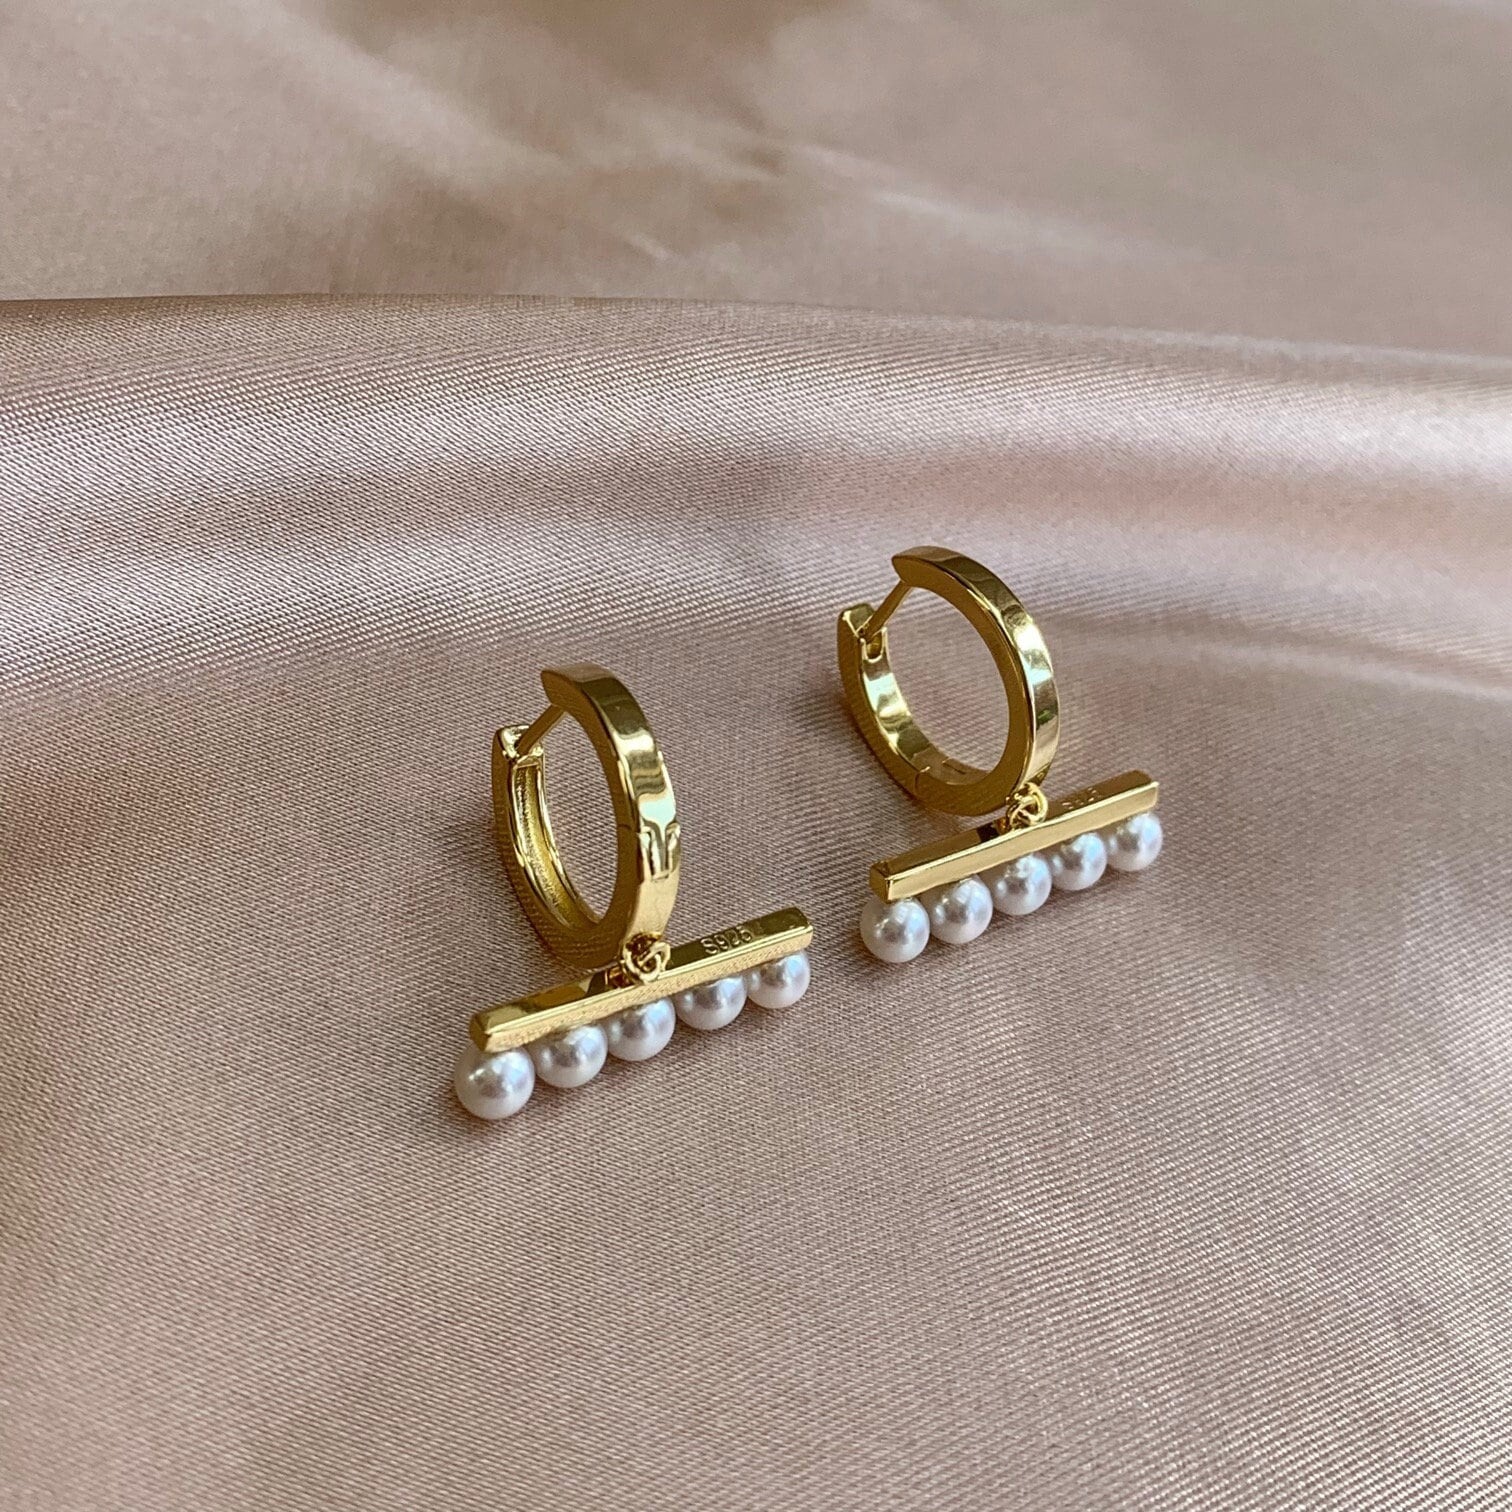 18K Gold Vermeil Freshwater Mini Pearls Balance Bar Drop Earrings, High Quality 5A Real Pearl Huggies, Stylish Earrings